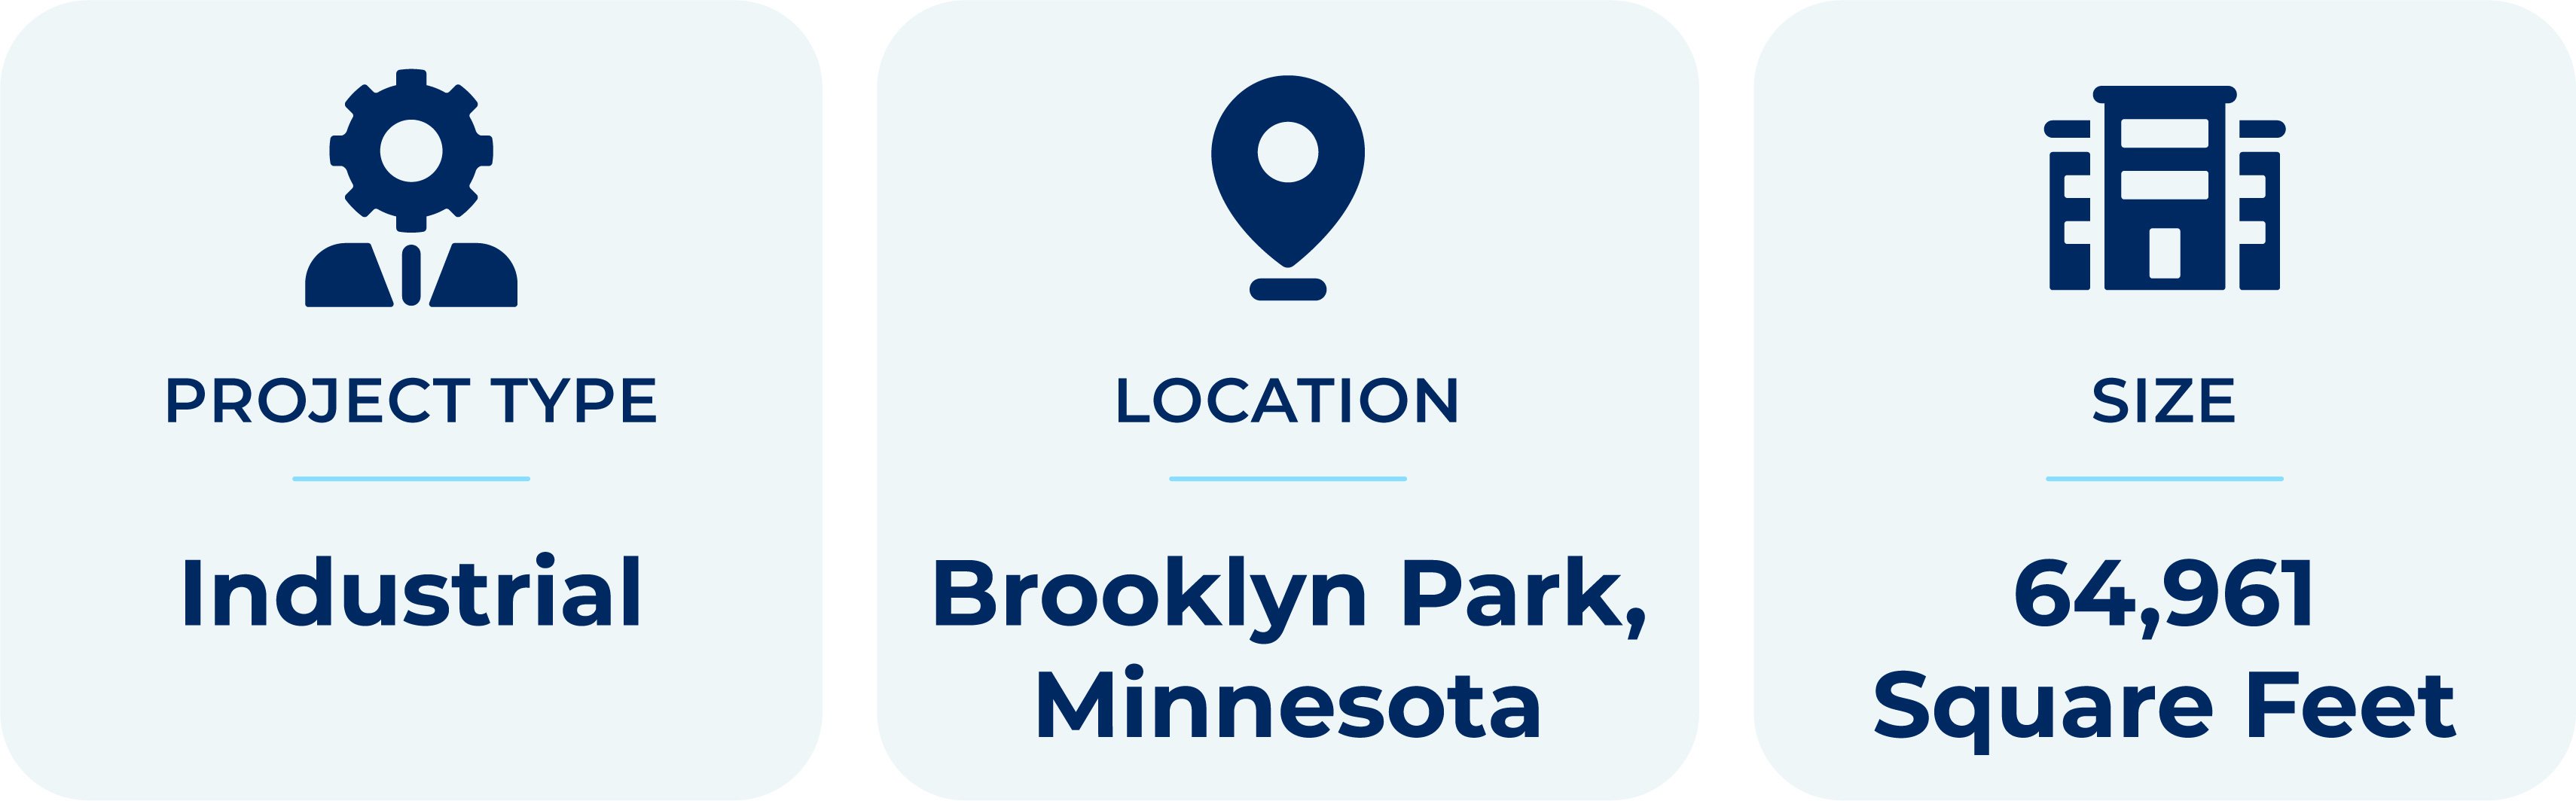 Product: Industrial, Location: Brooklyn Park, Minnesota, Size: 64,961 SF